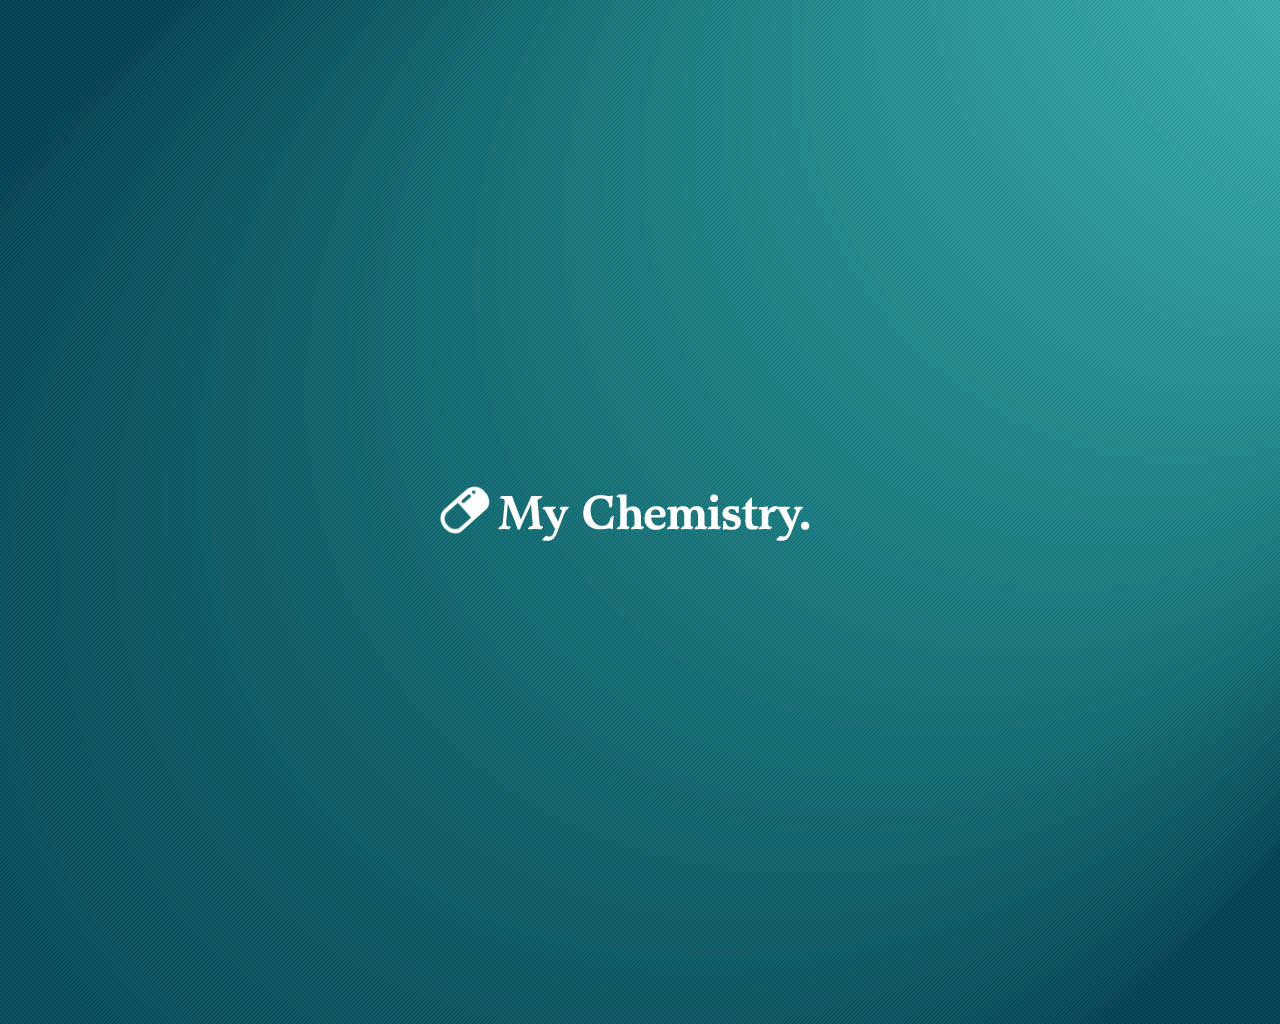 Cute Chemistry Wallpaper Image